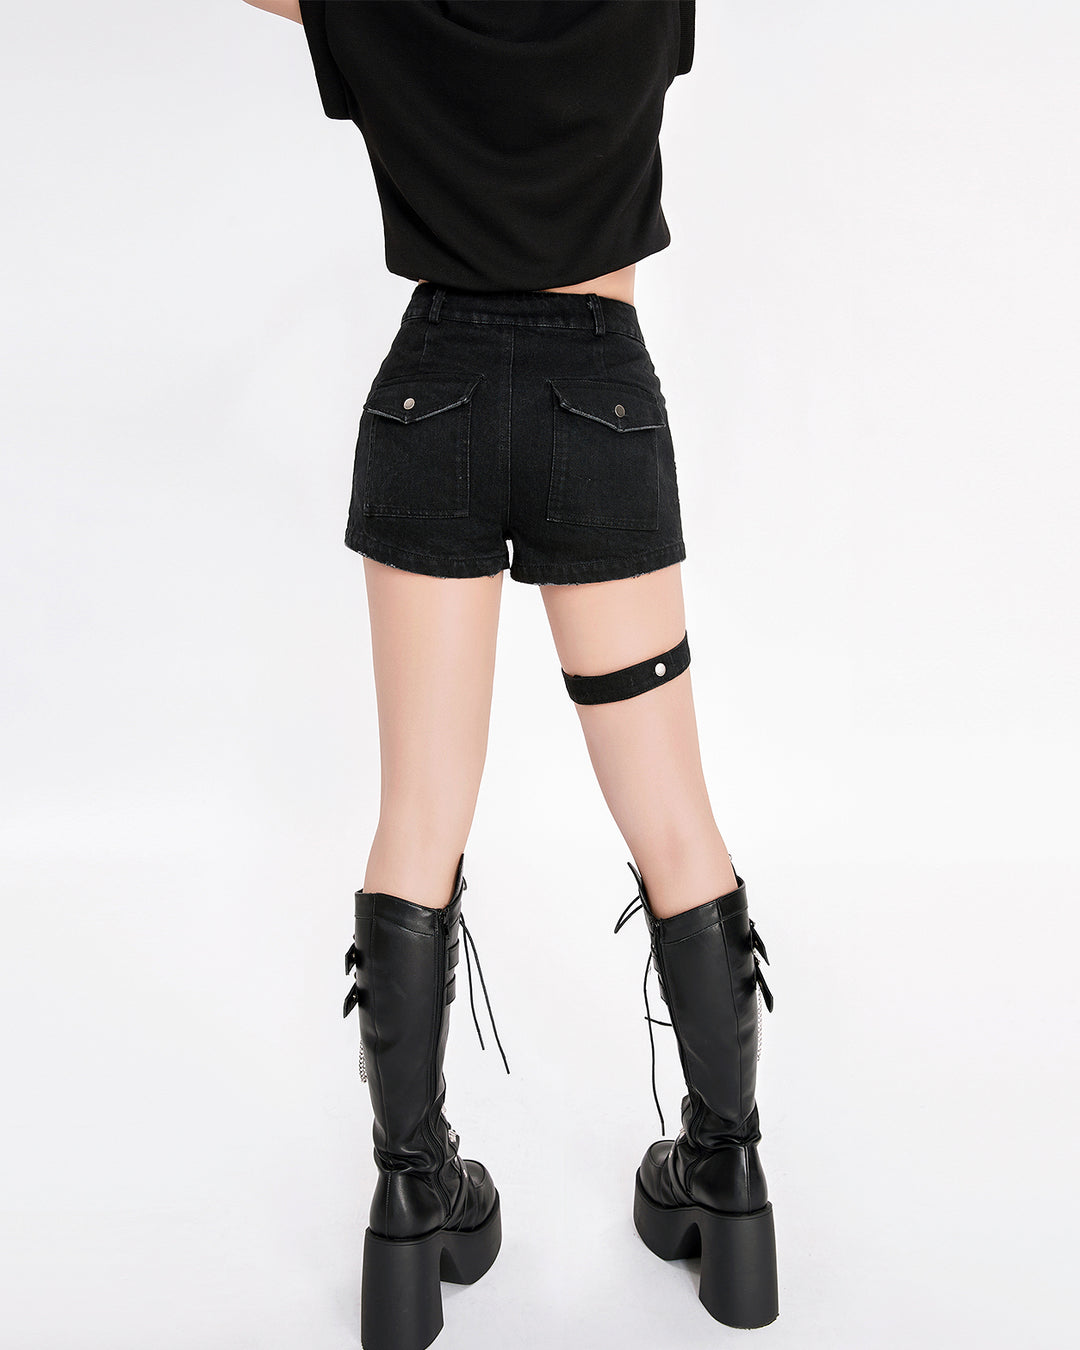 Studded Punk Low-rise A-line Black Denim Shorts